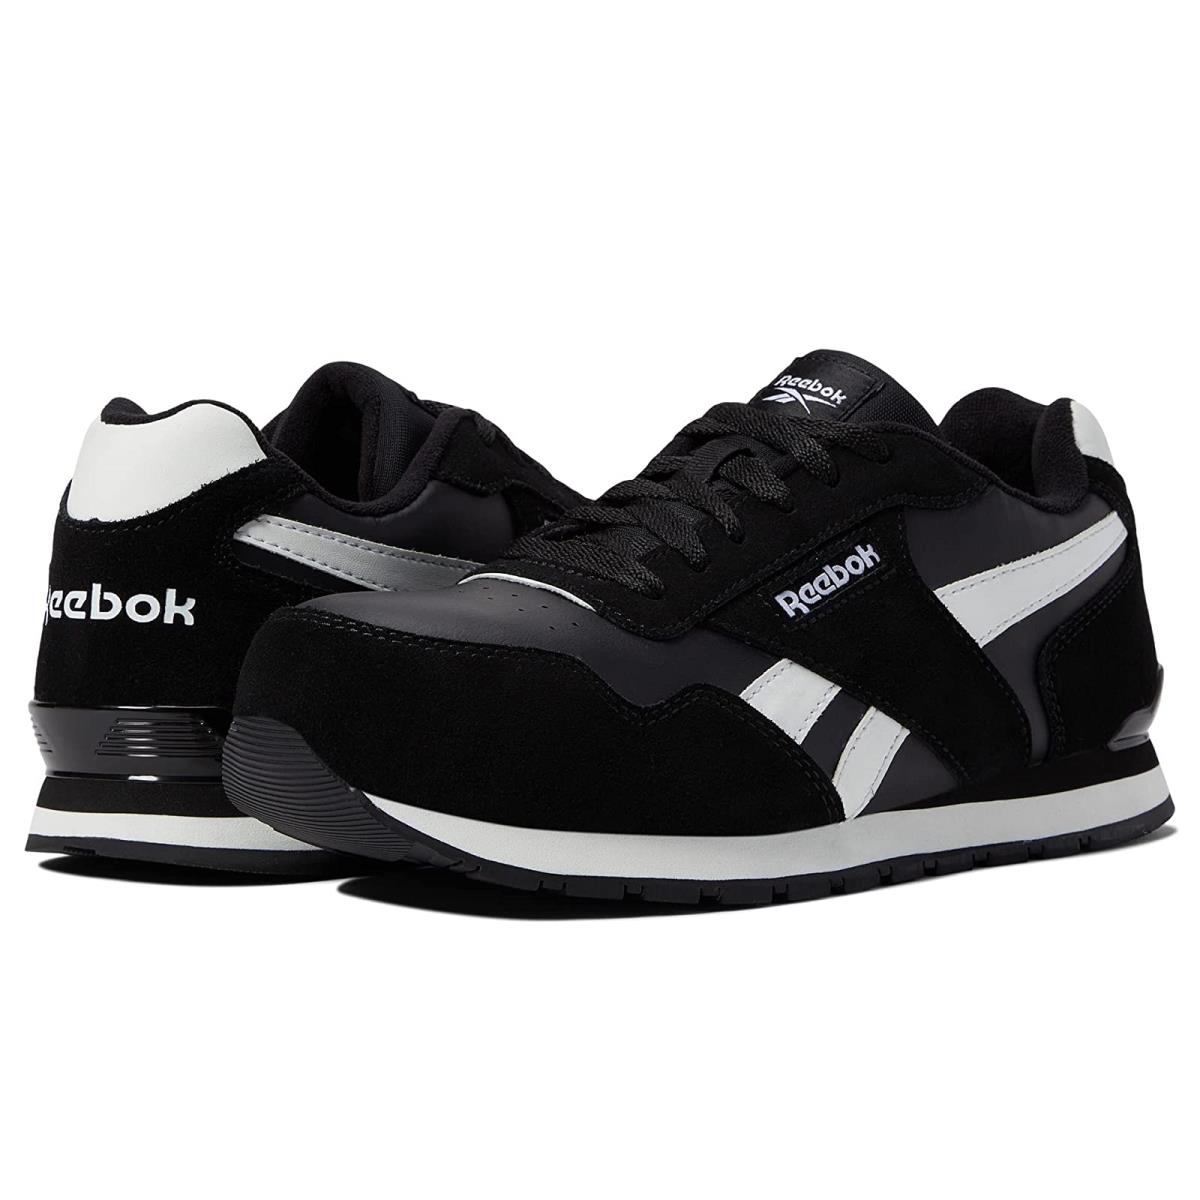 Man`s Sneakers Athletic Shoes Reebok Work Harman Work SD10 Comp Toe Black/White